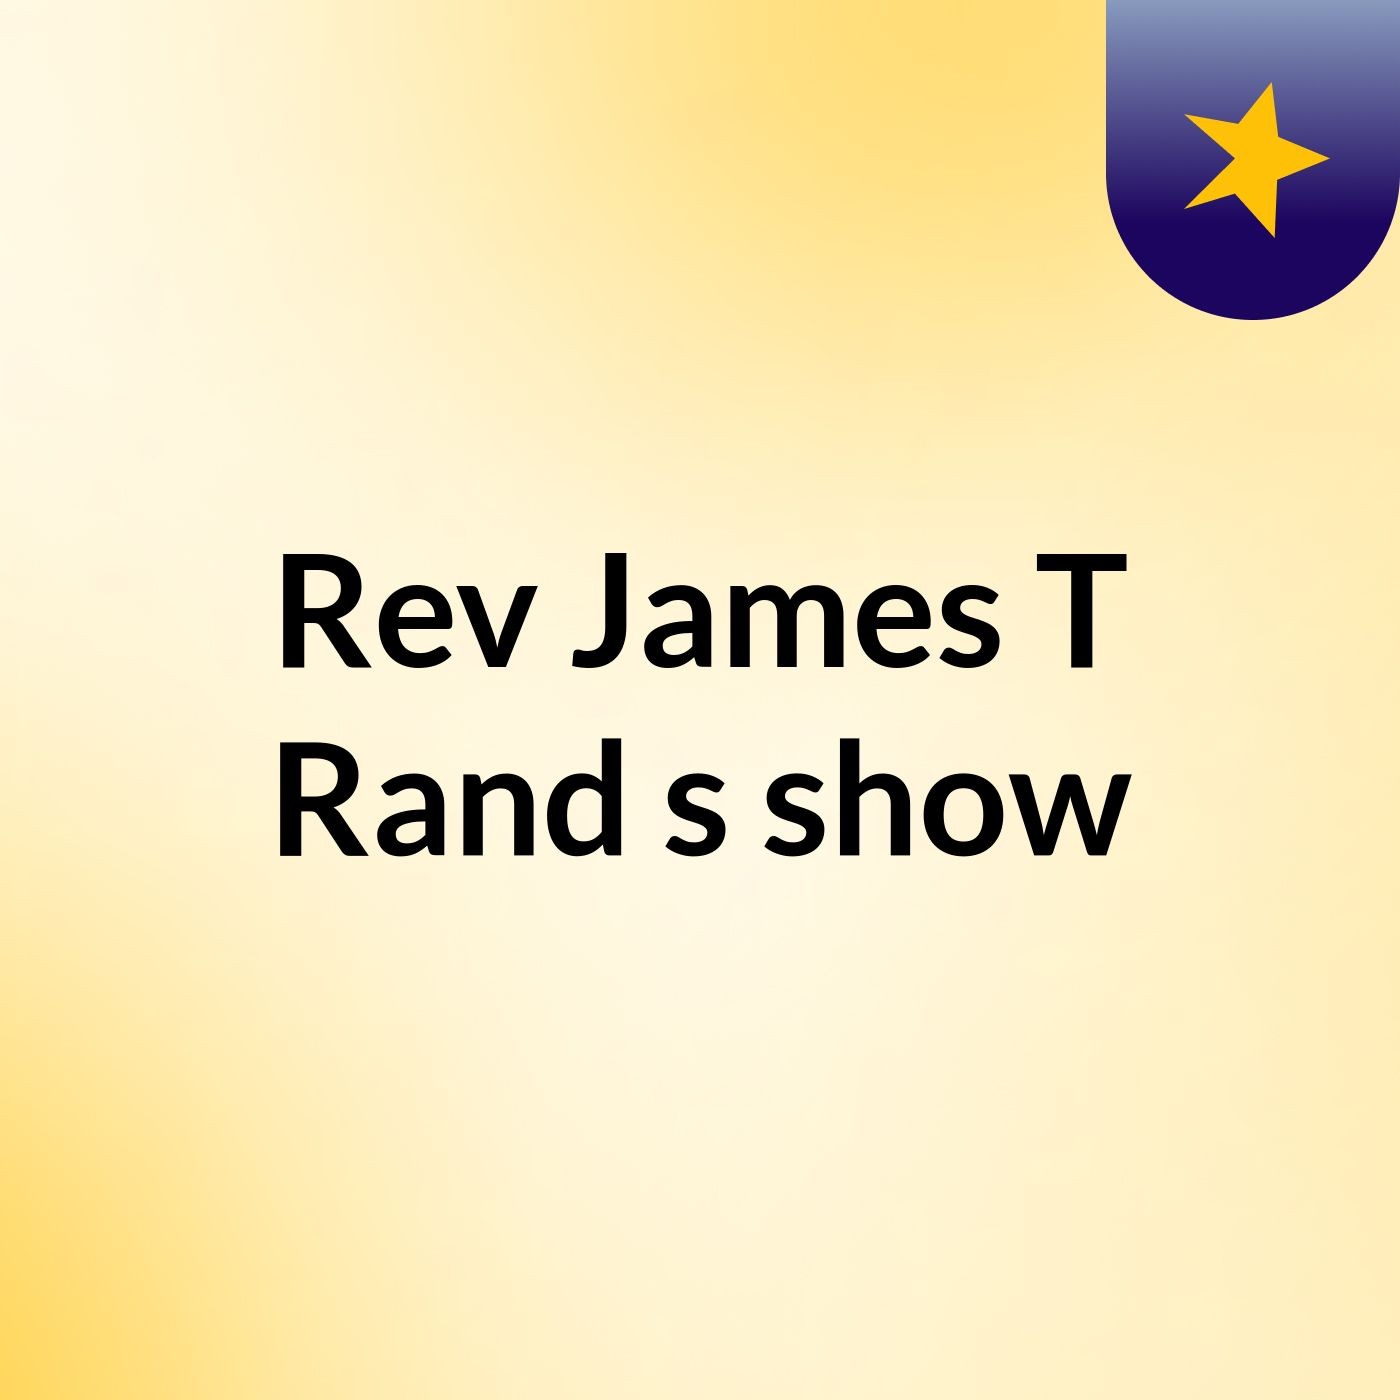 Rev James T Rand's show